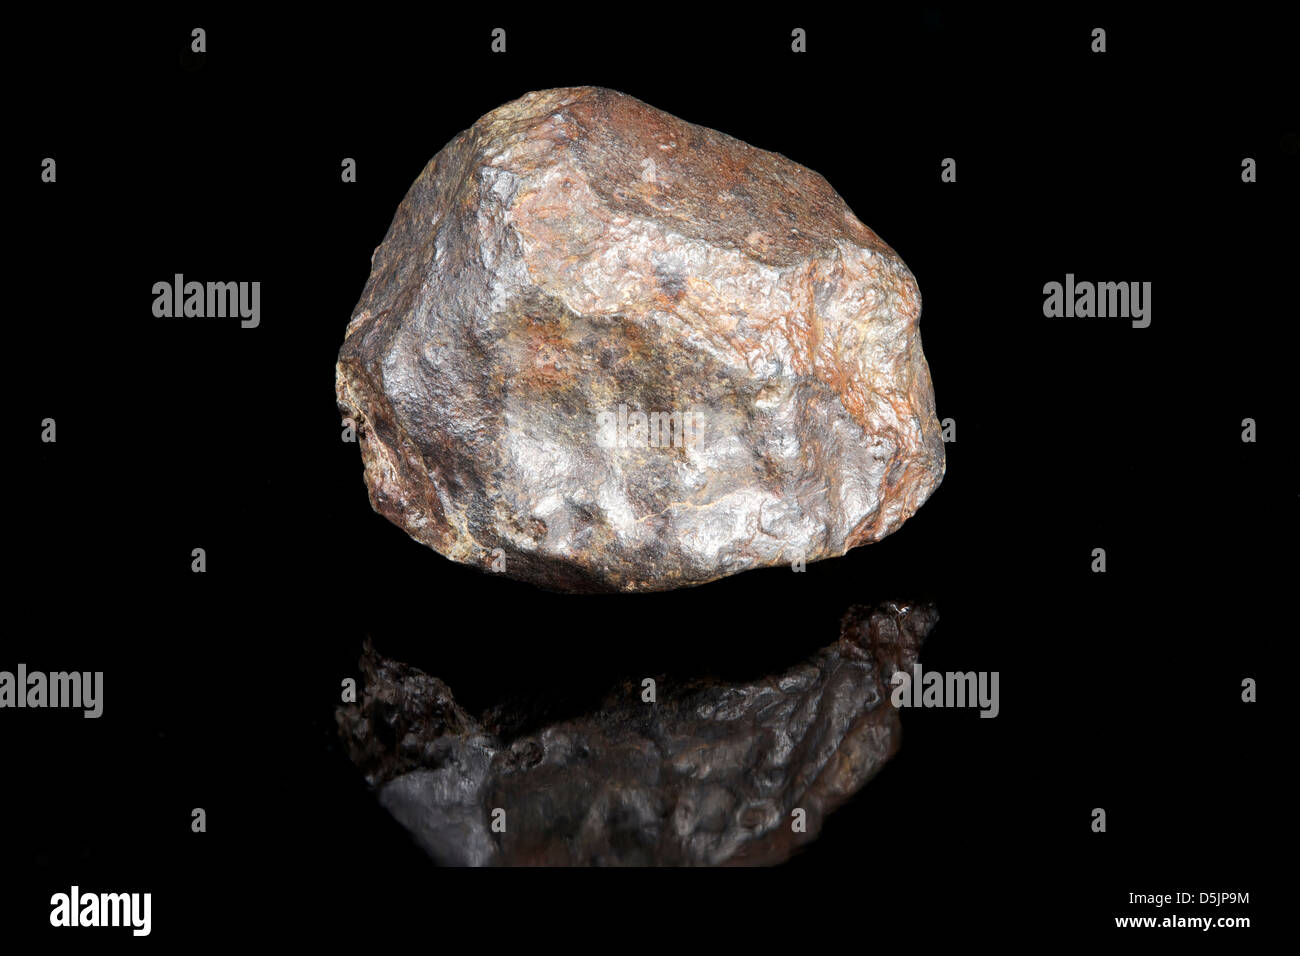 Stone meteorite with regmaglypts (thumb print like impressions), Algeria Stock Photo